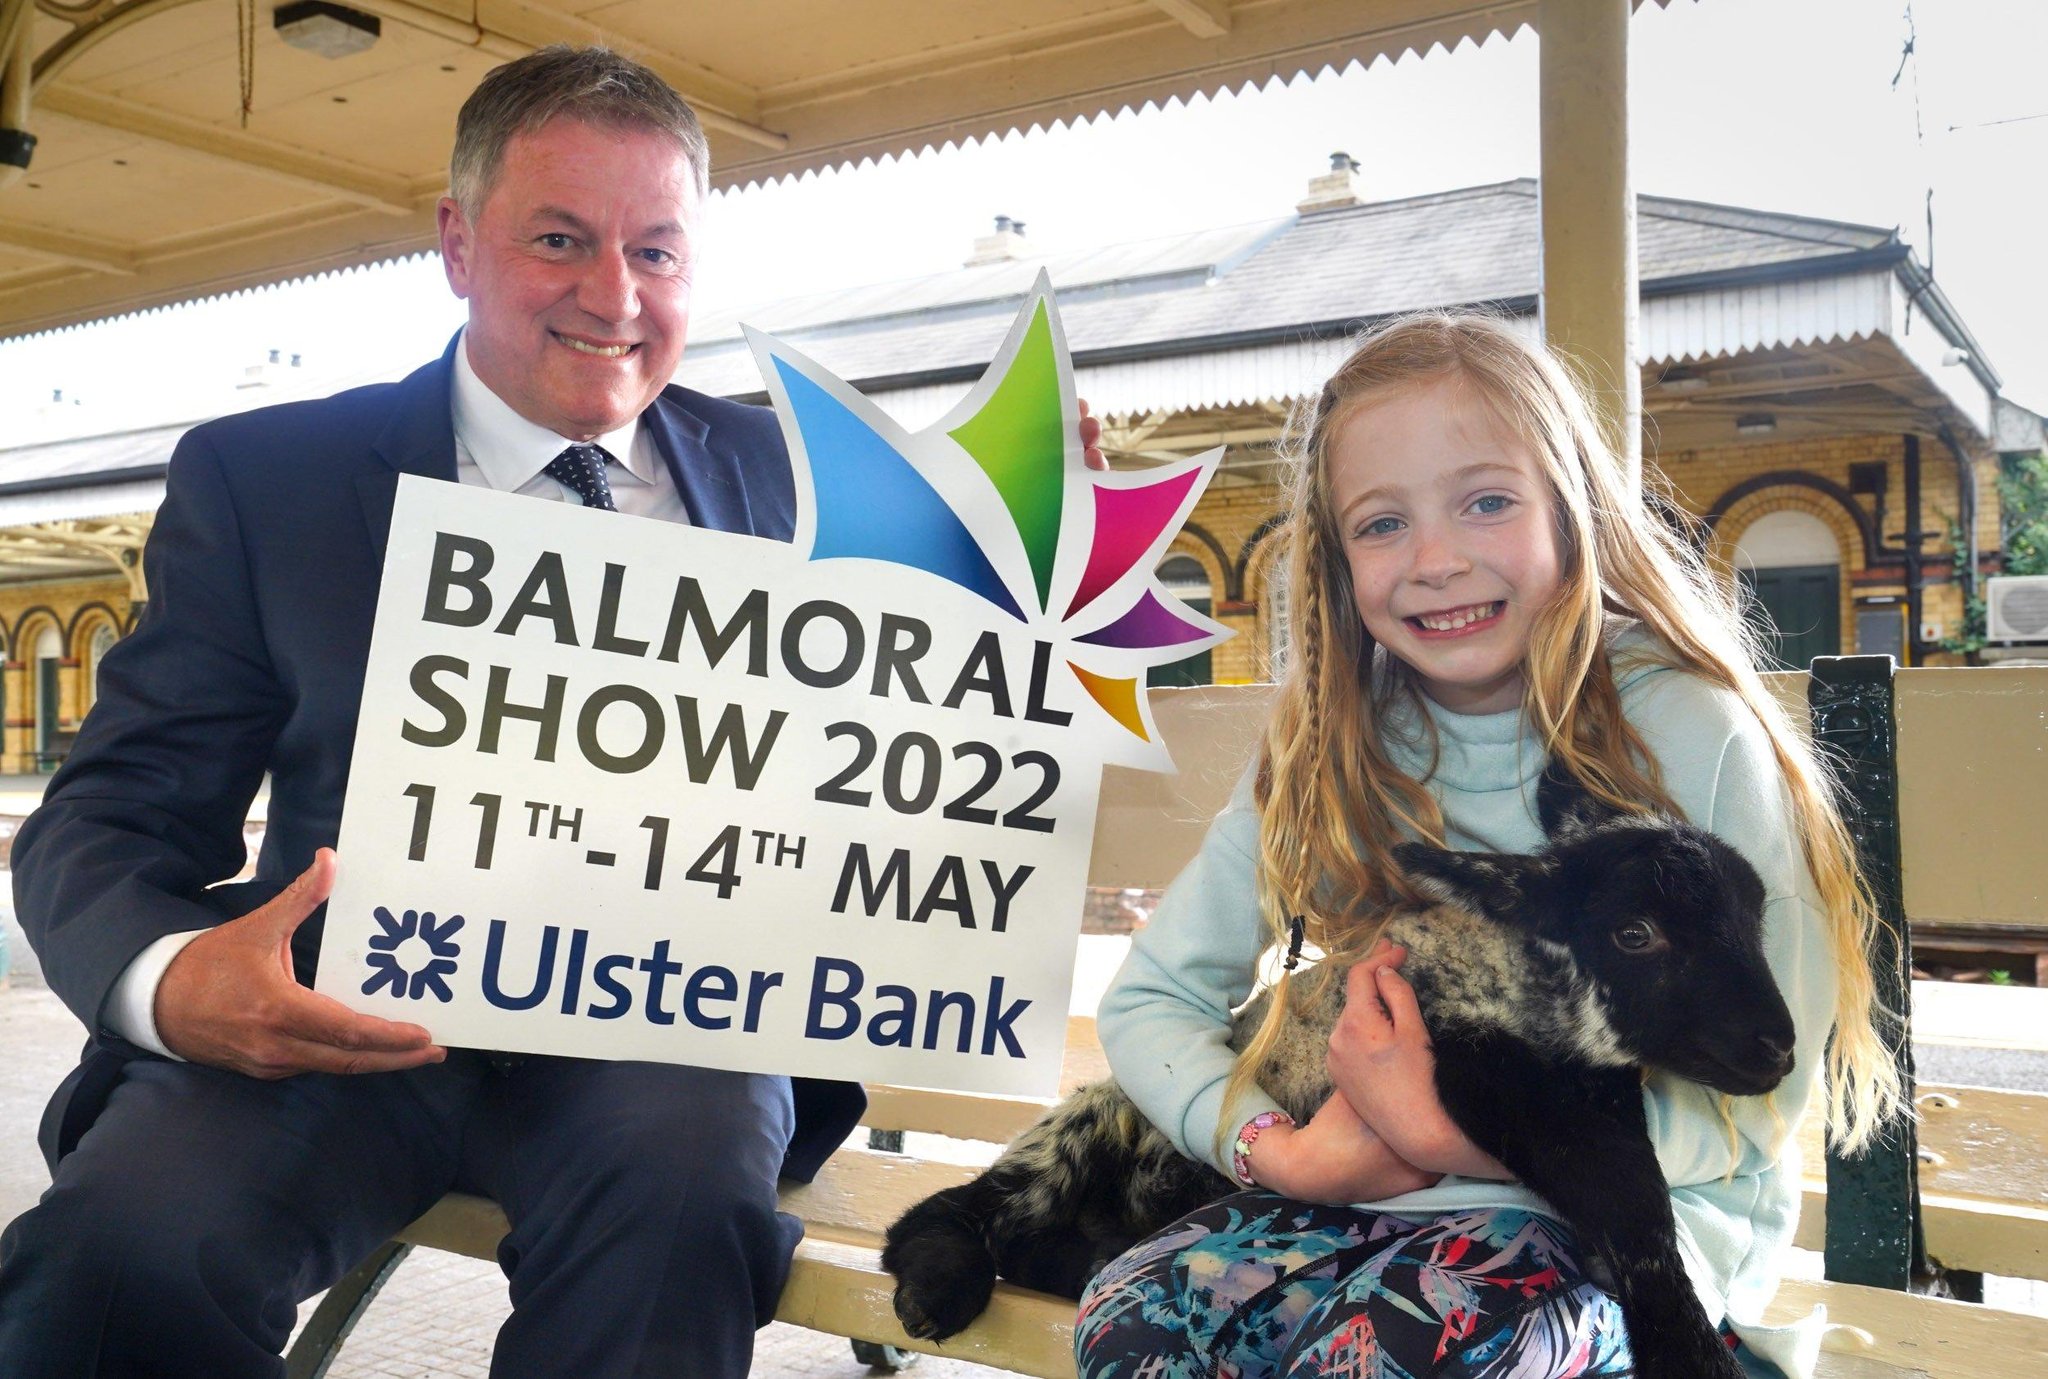 Translink offer special timetables for Balmoral Show